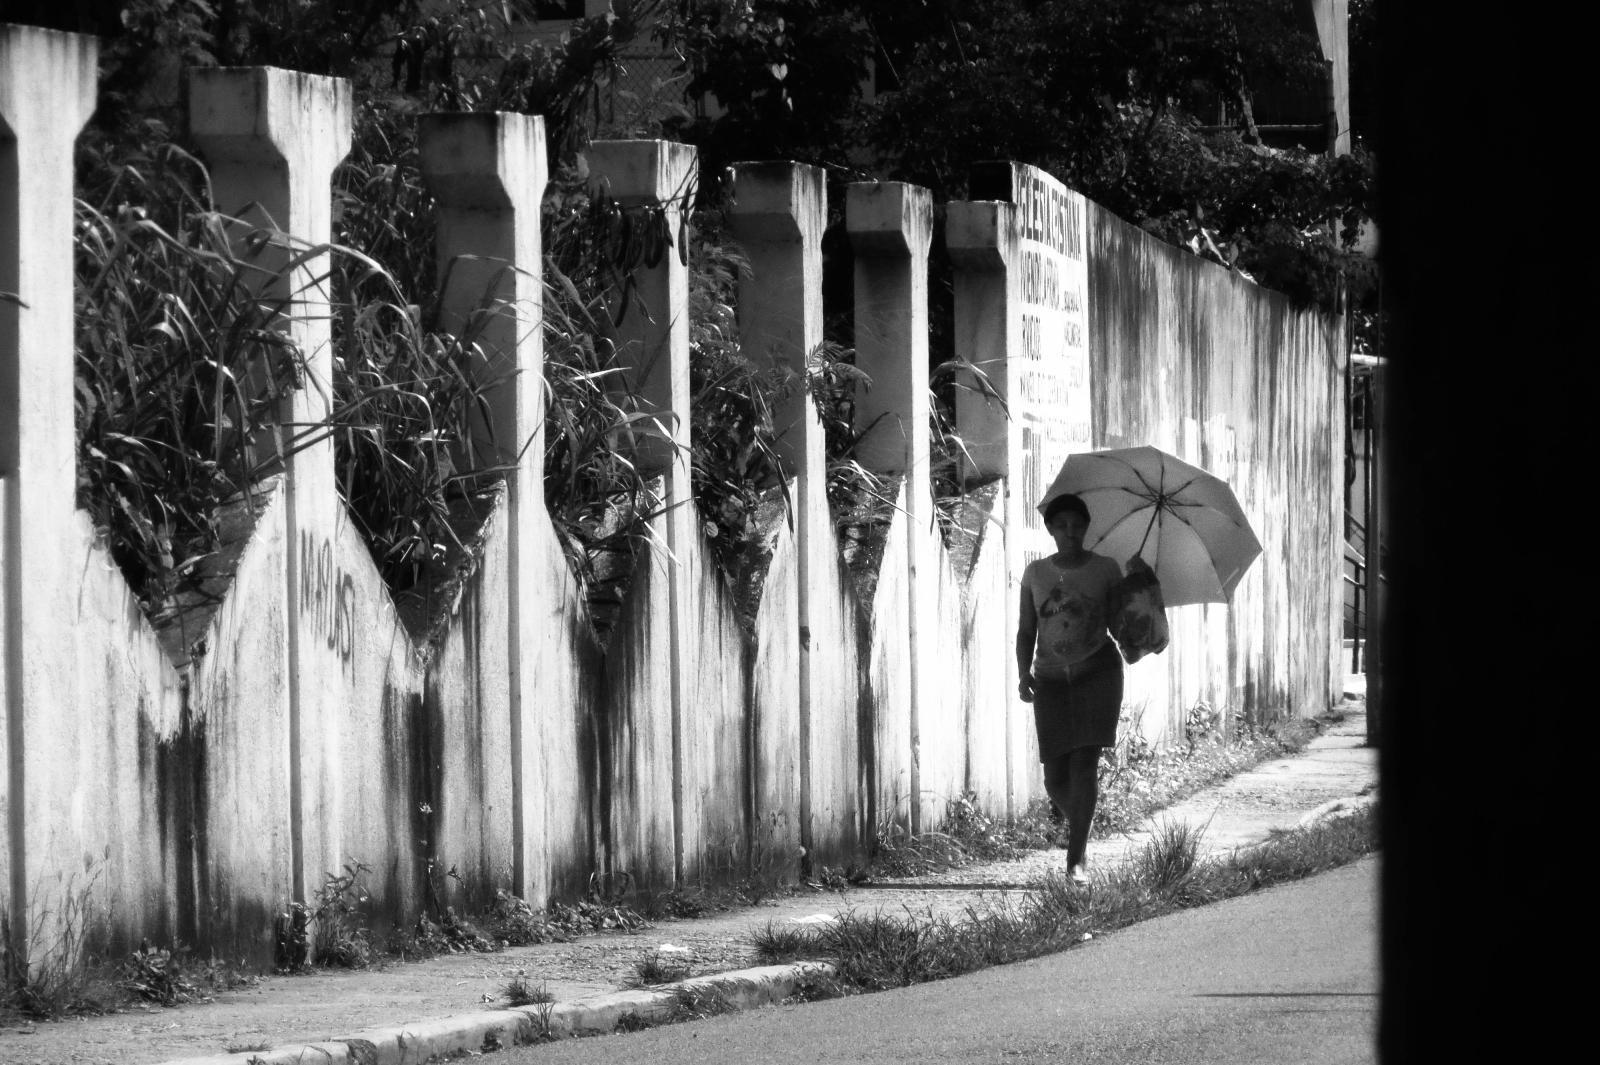 Umbrella Lady